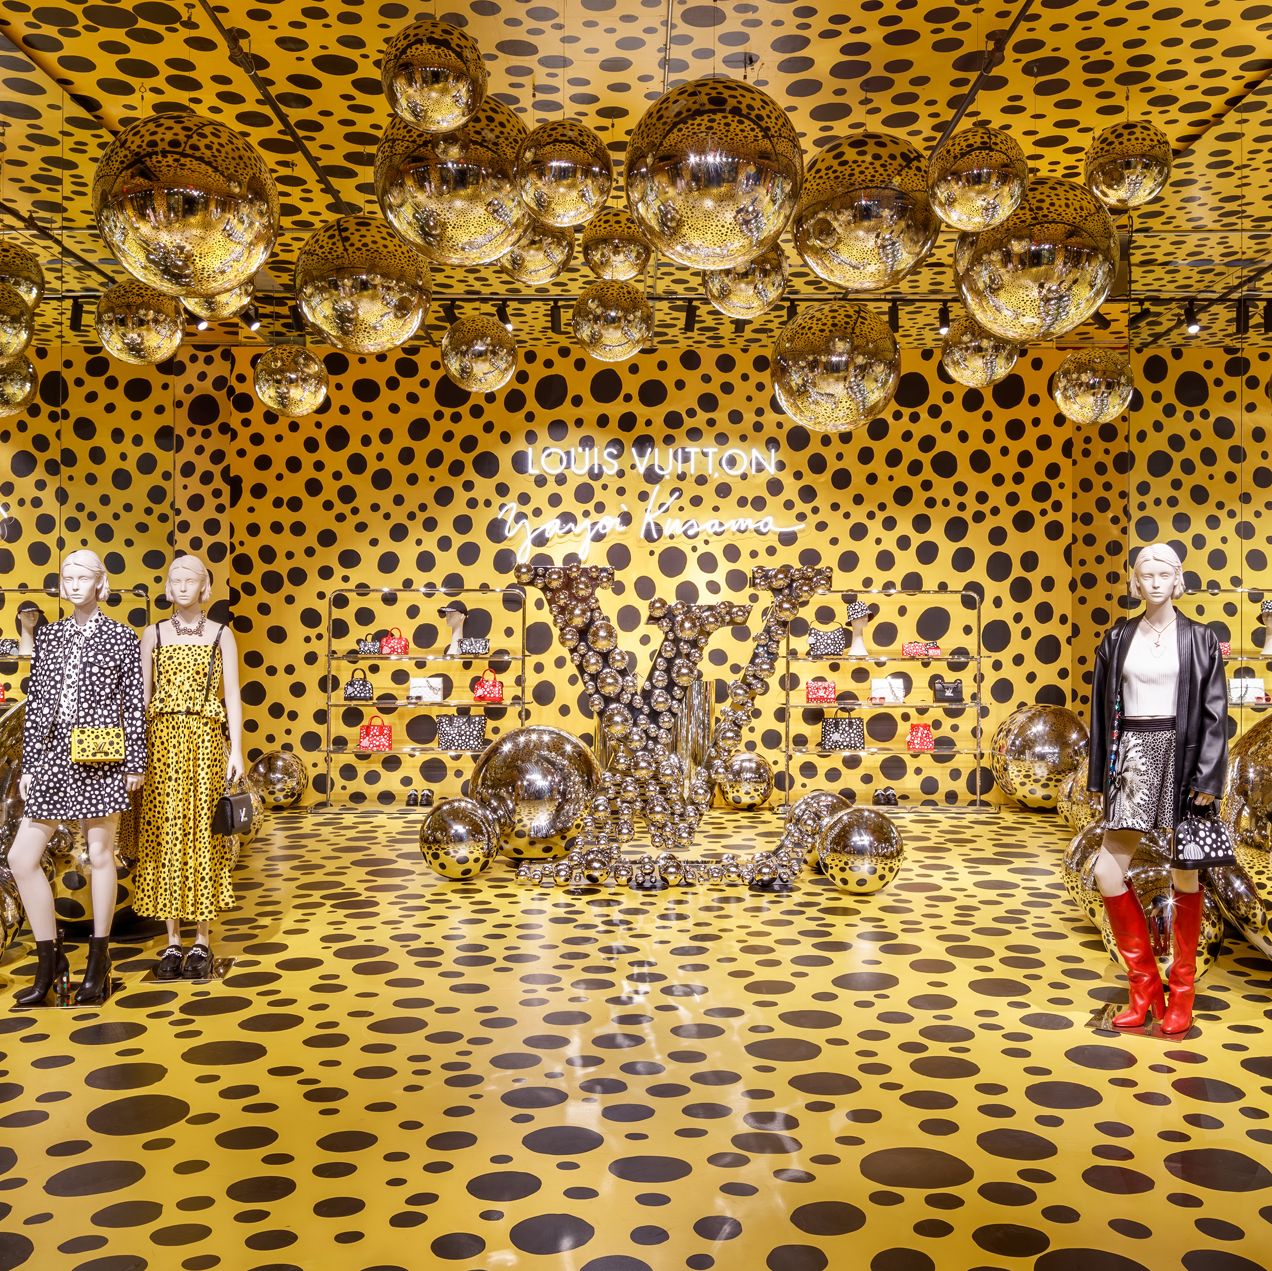 Louis Vuitton’s New York Store Has Been Overtaken by Yayoi Kusama-Inspired Polka Dots